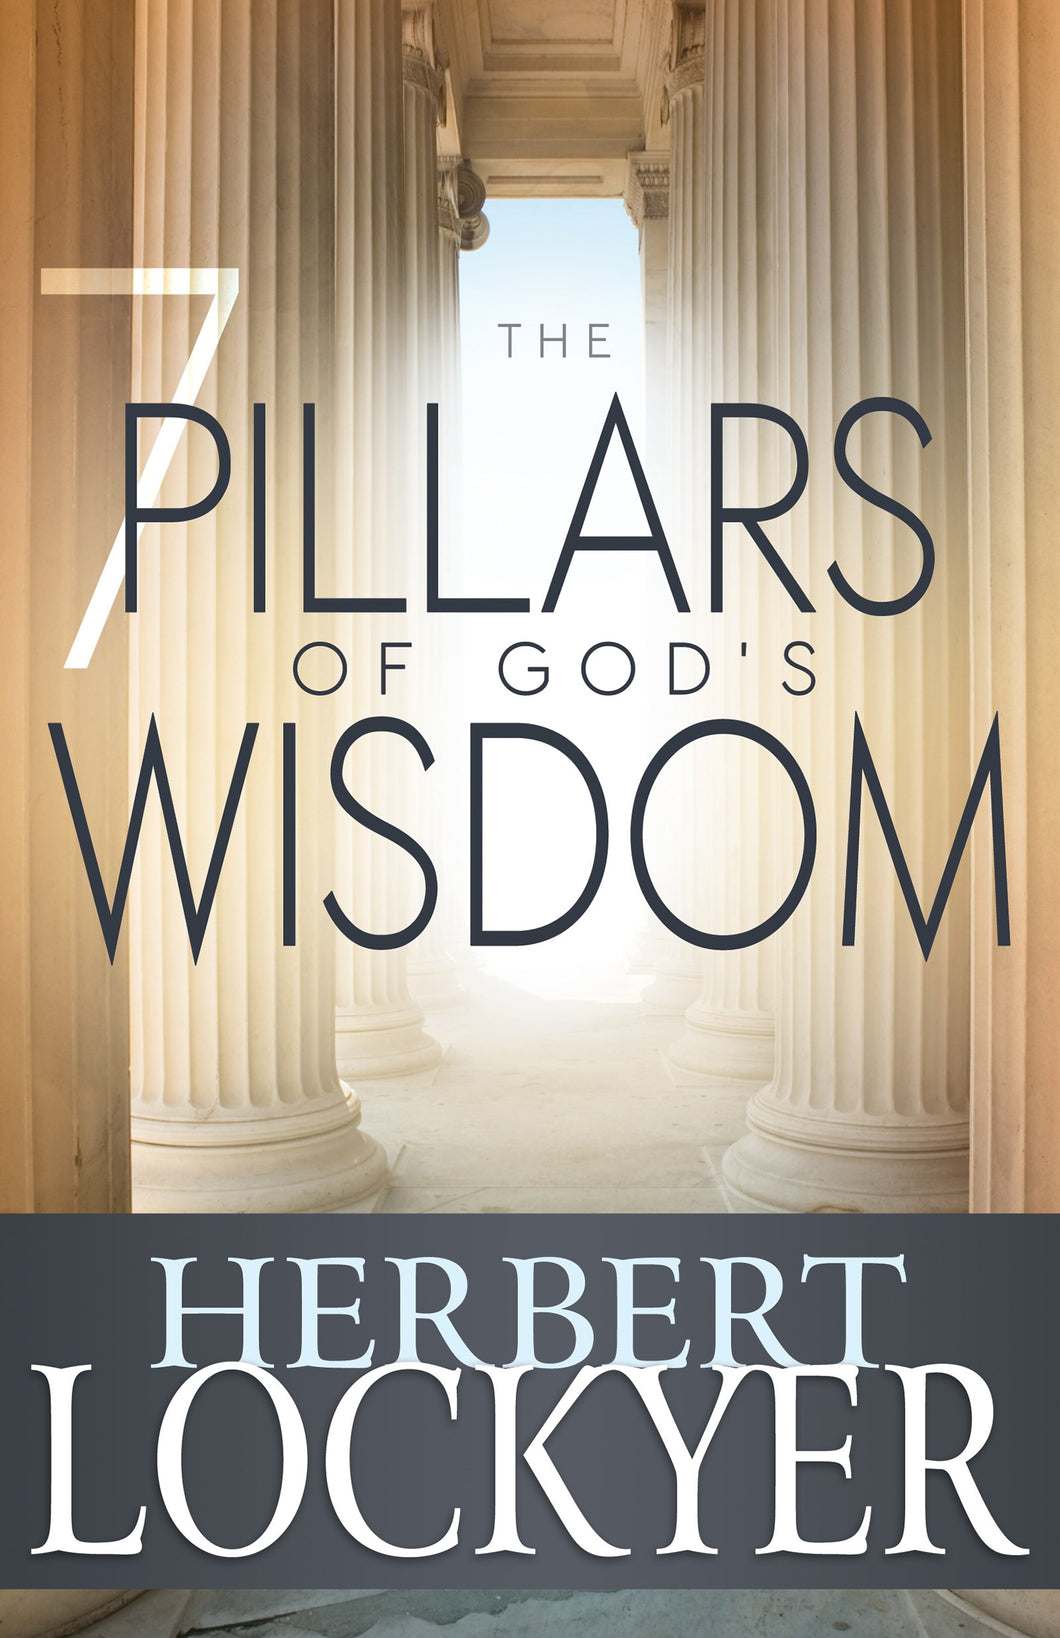 7 Pillars Of God's Wisdom